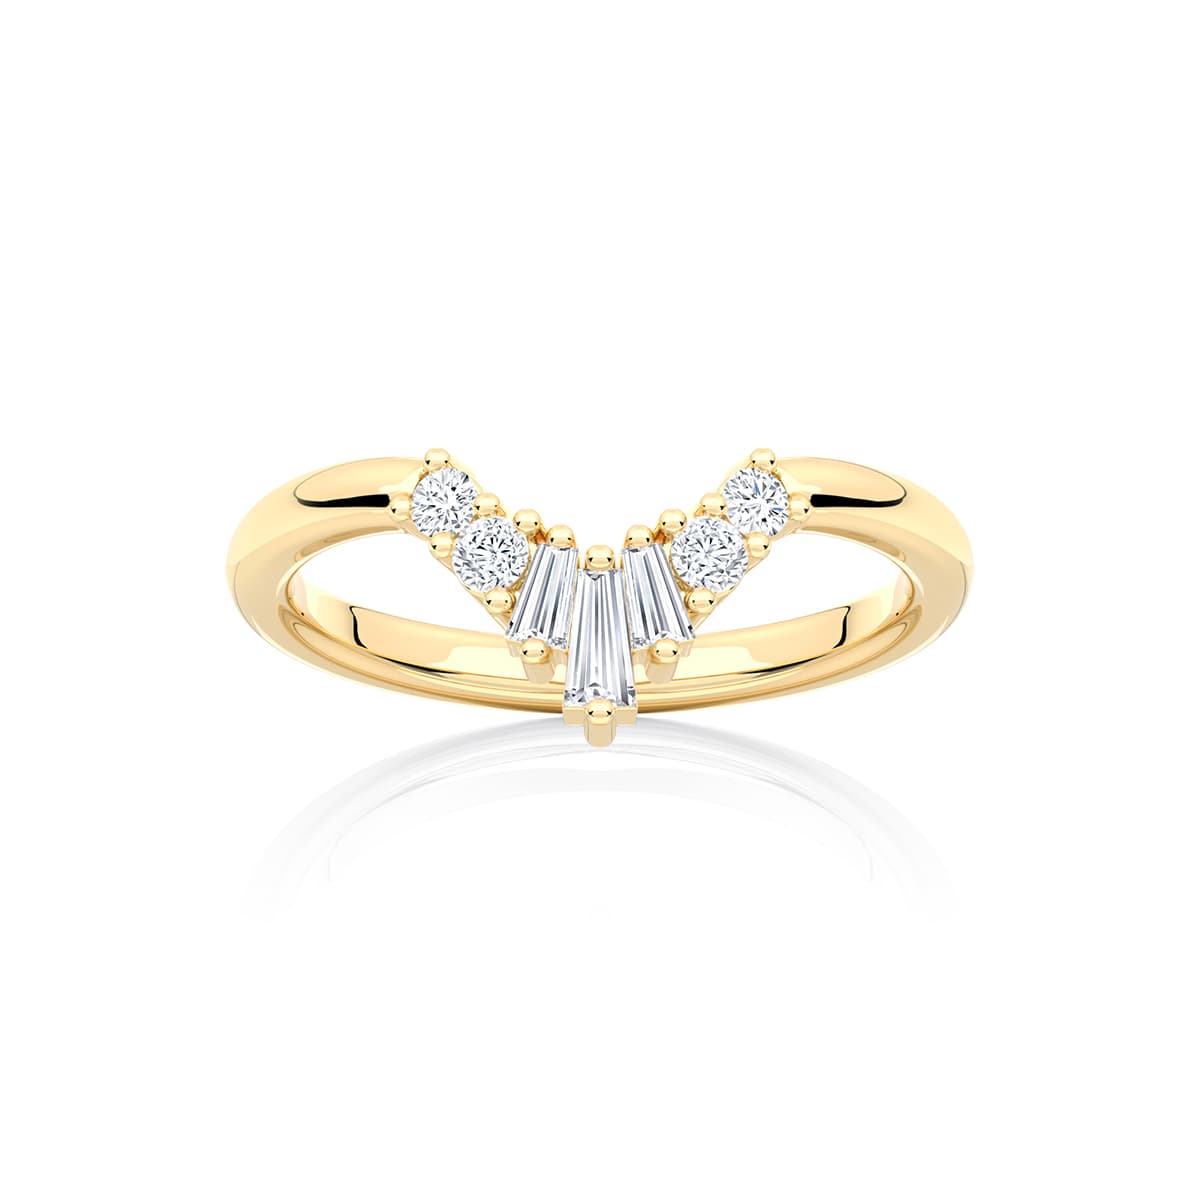 Serac Diamond Contoured Wedding Ring in Yellow Gold